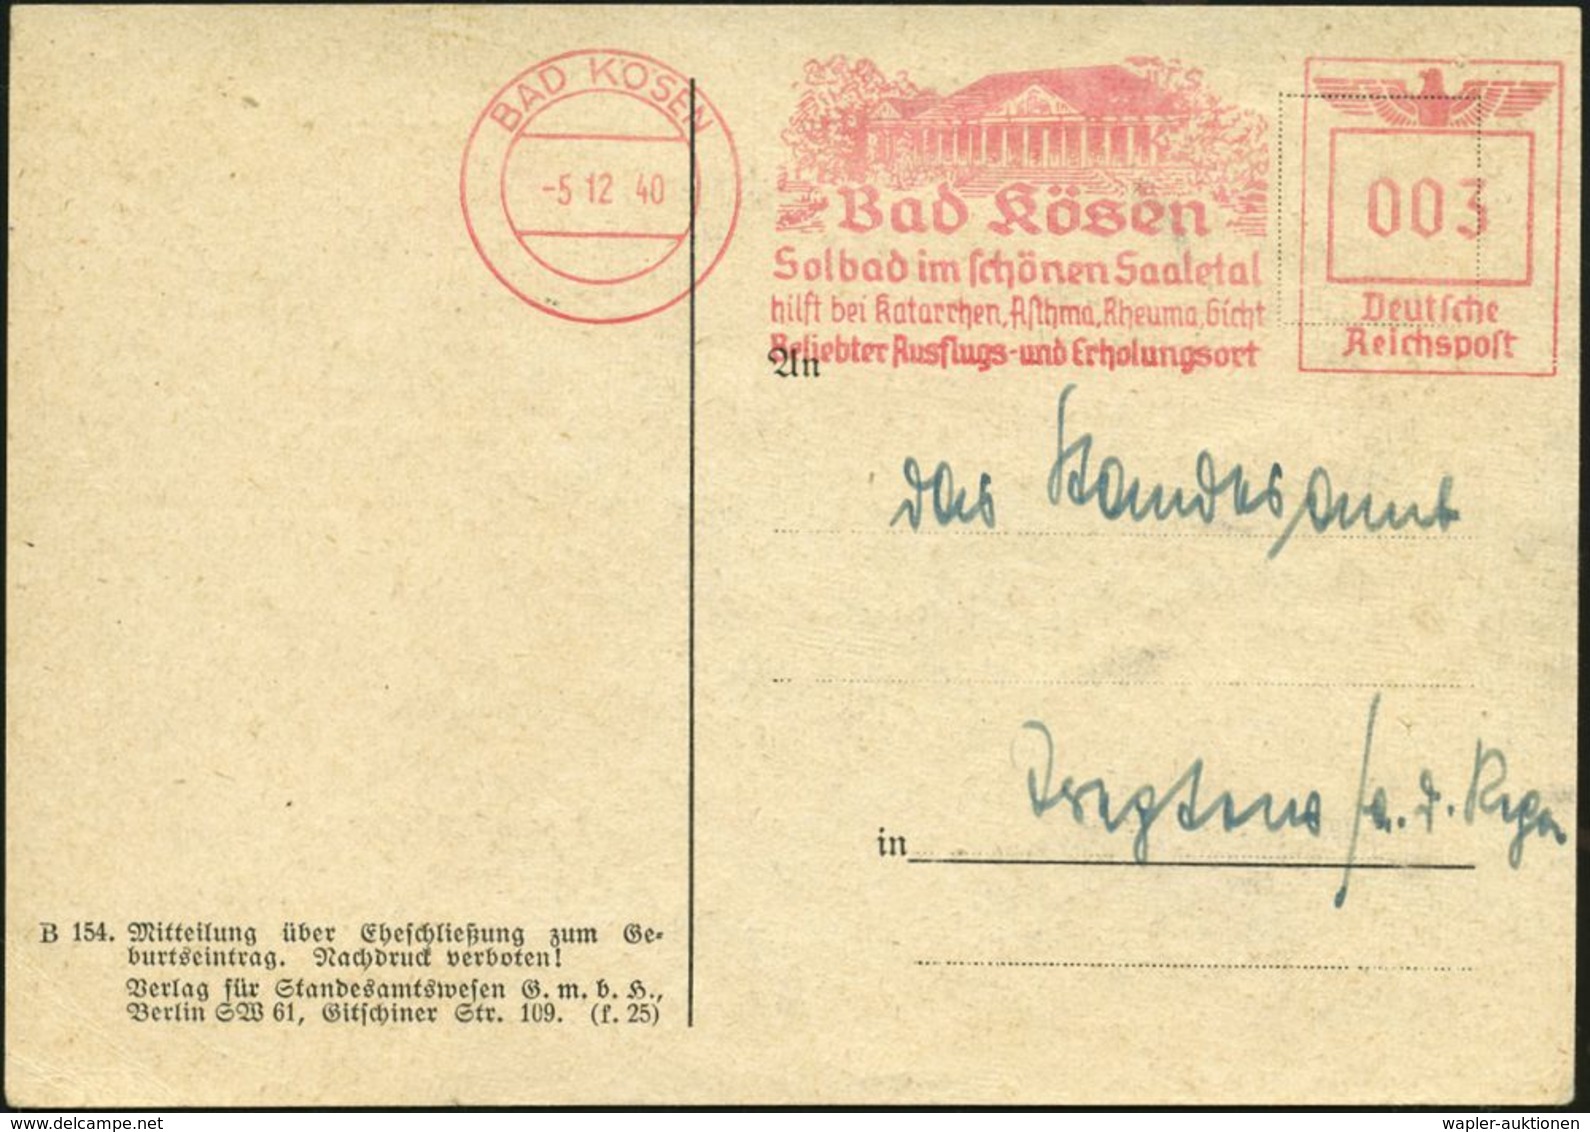 KURORTE / HEILQUELLEN : BAD KÖSEN/ Solbad../ Hilft Bei Katarrhen,Asthma,Rheuma,Gicht.. 1940 (5.12.) Dekorat. AFS (Kurhau - Medicine